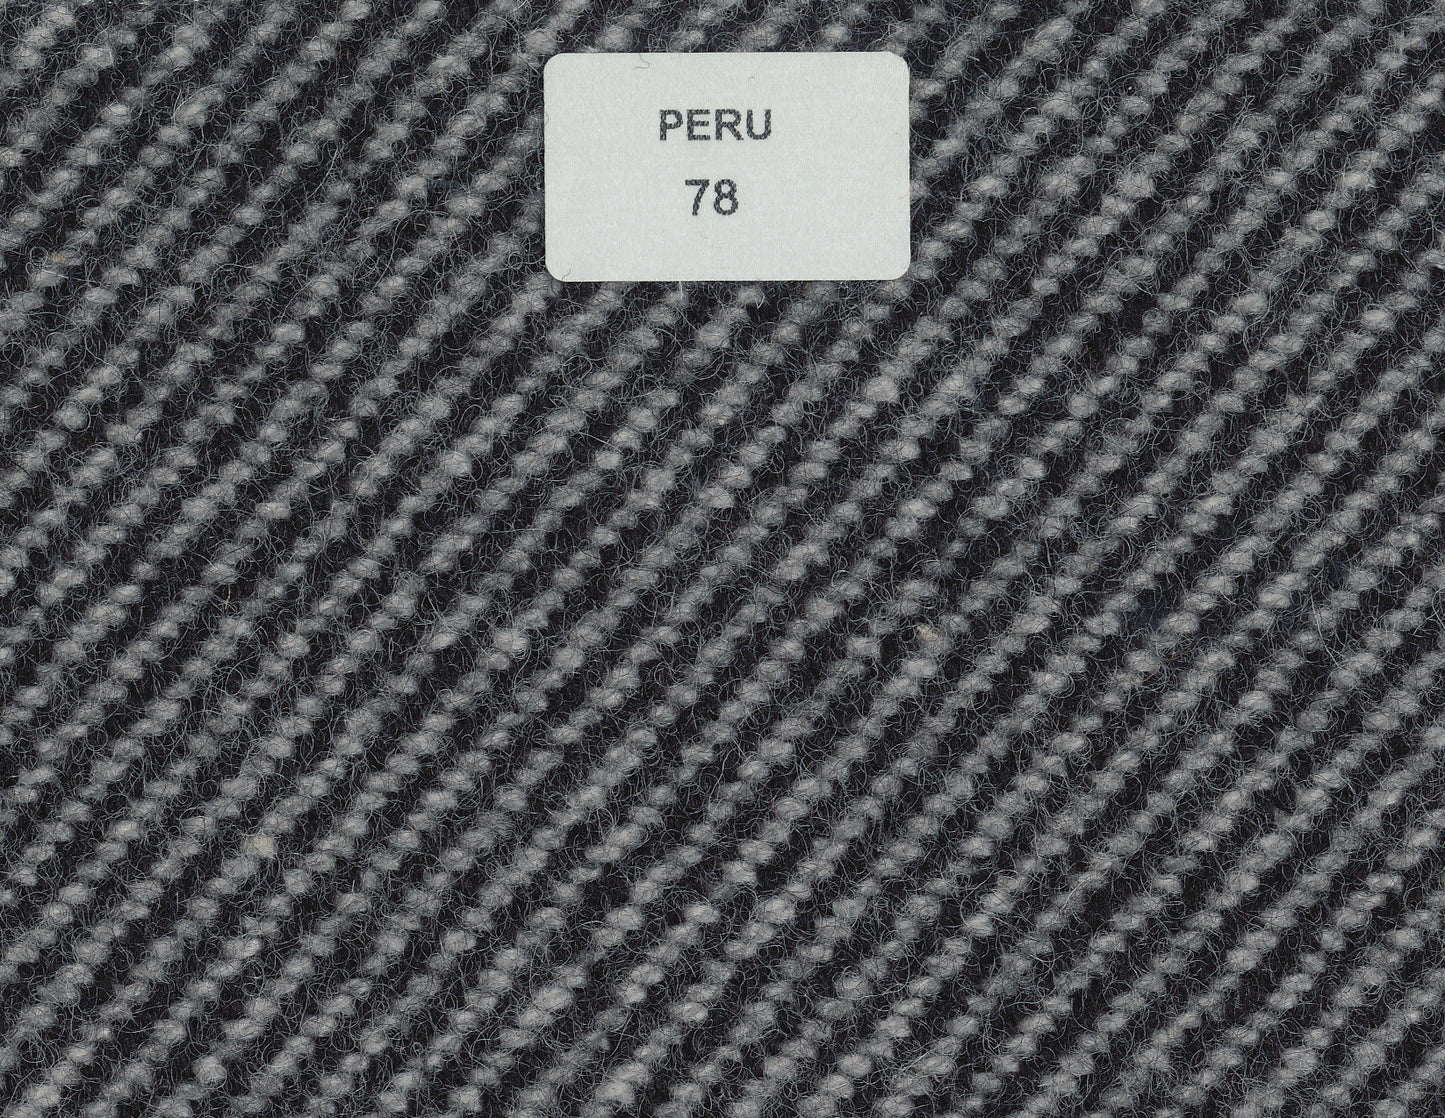 DANISH ART WEAVING  PERU   2023